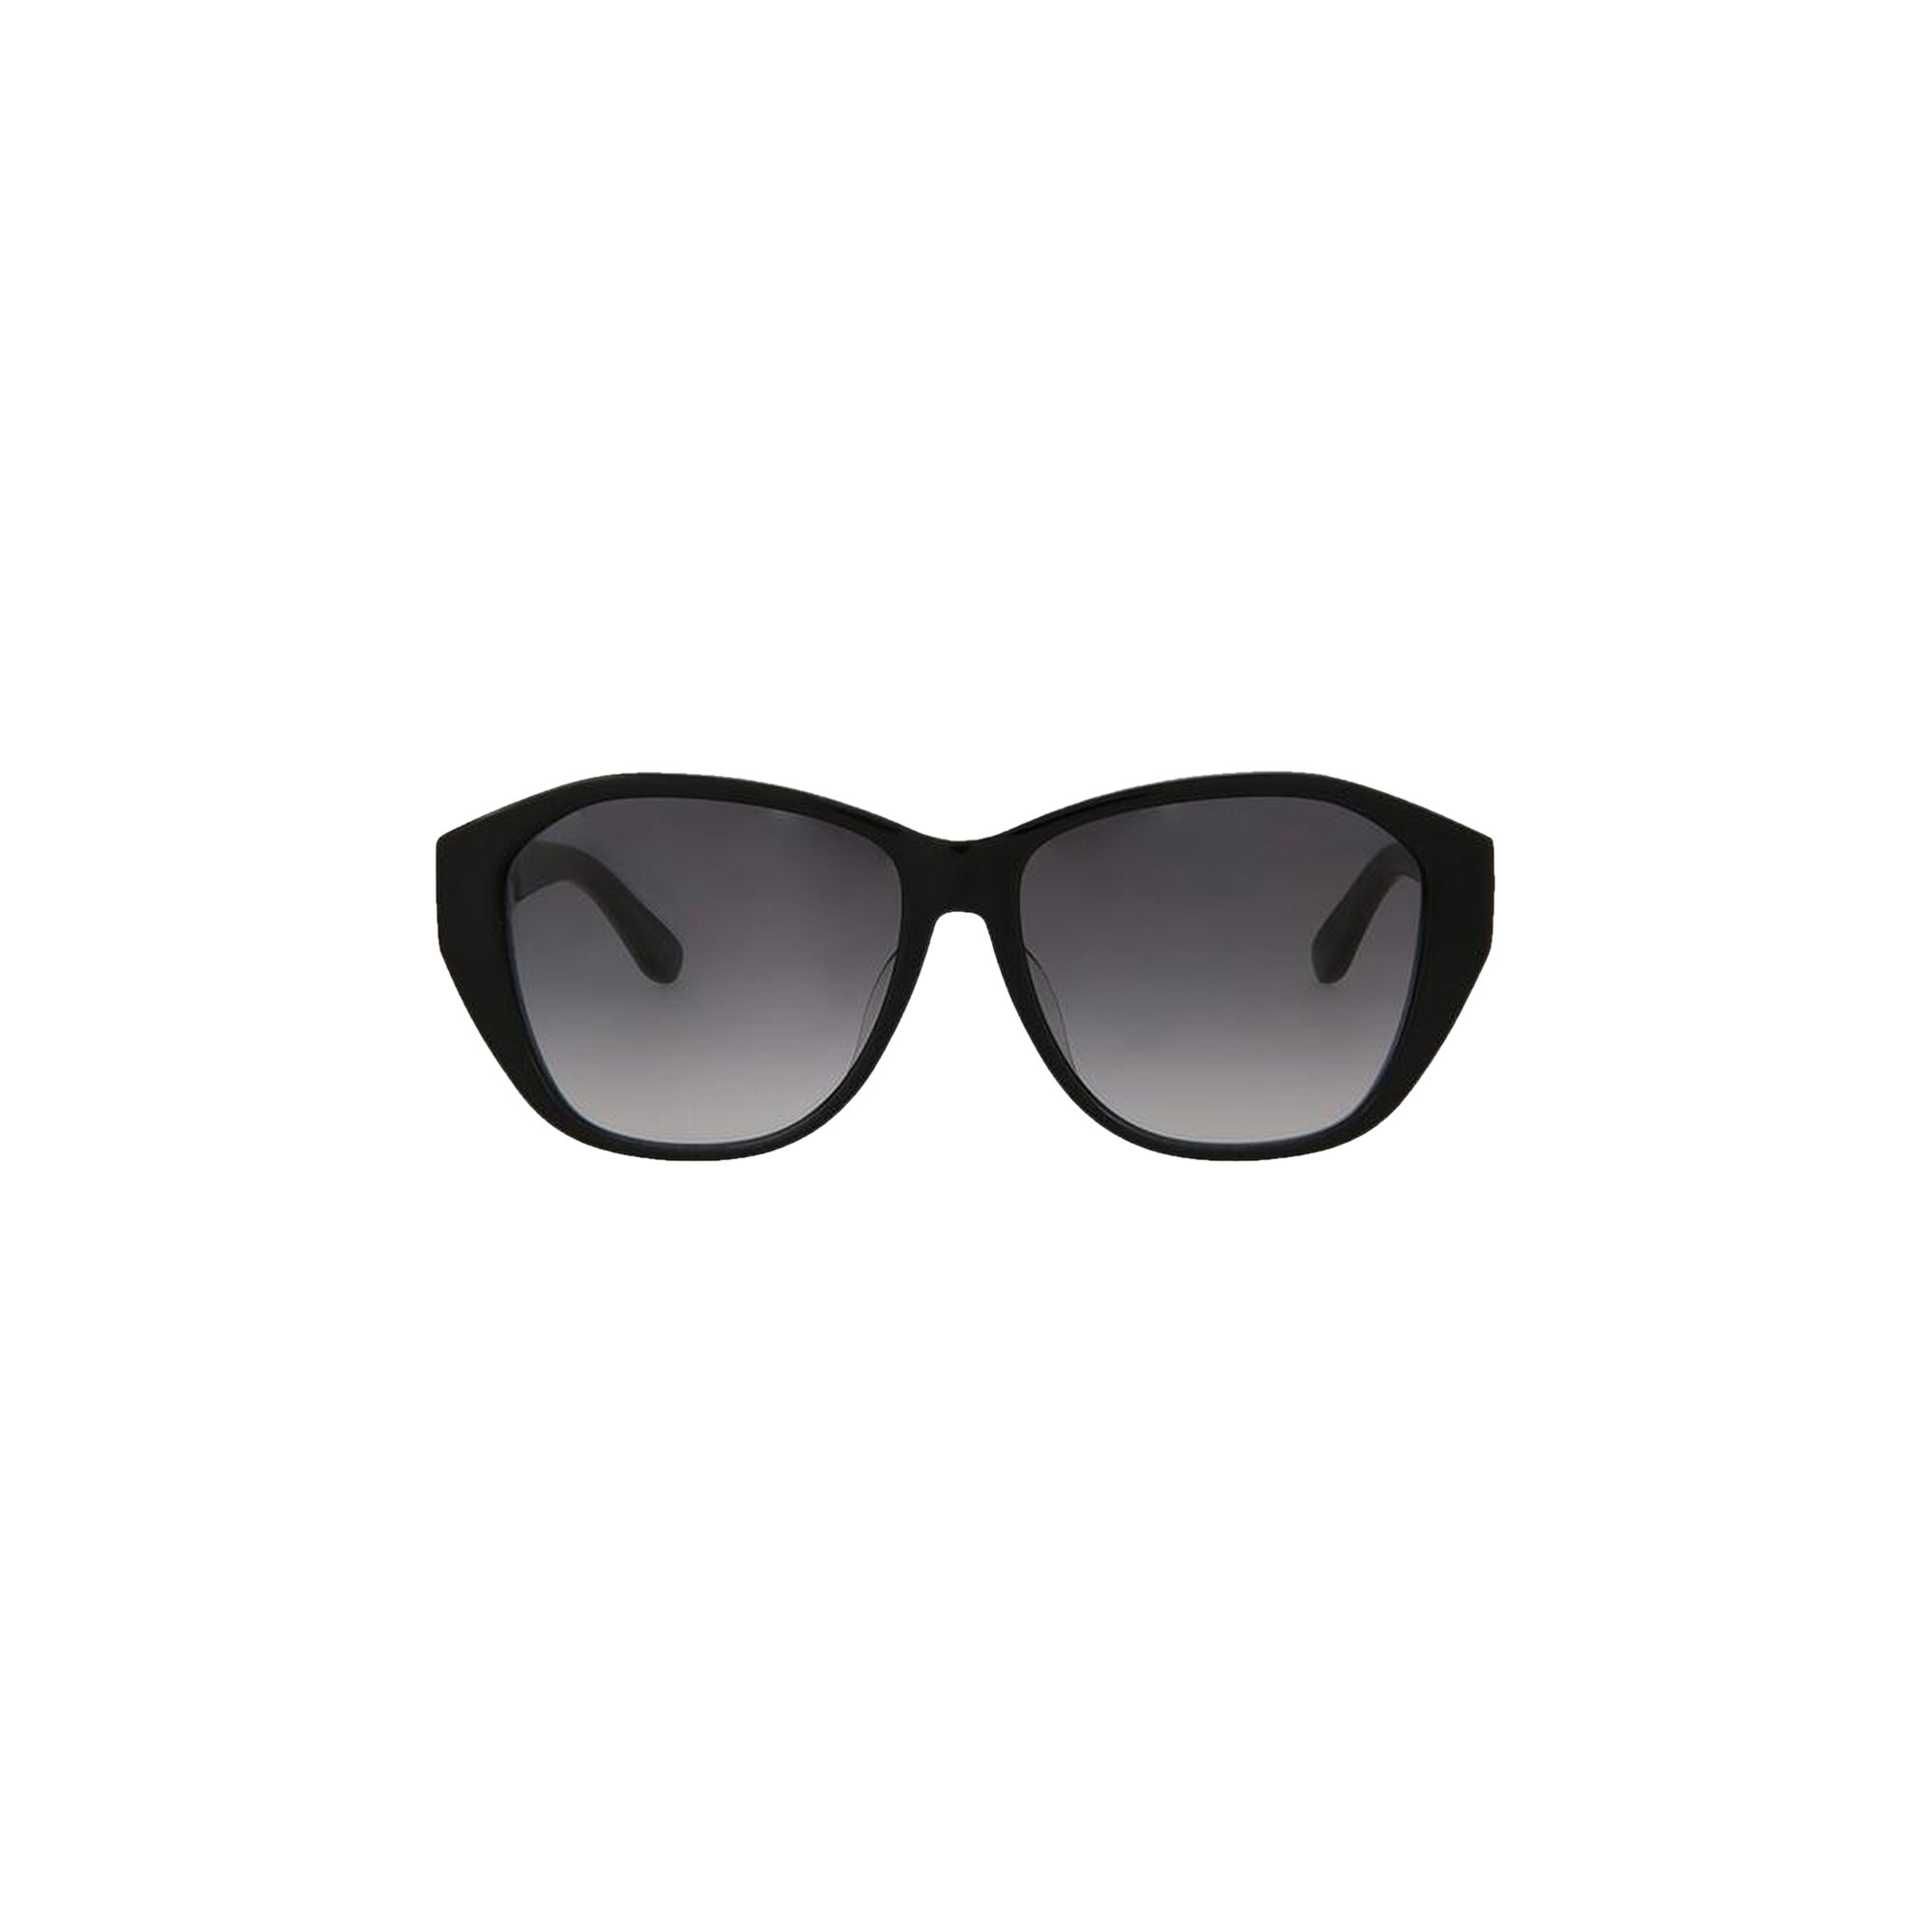 Buy Saint Laurent Oversized Sunglasses 'Black' - SLM8F 30001590 